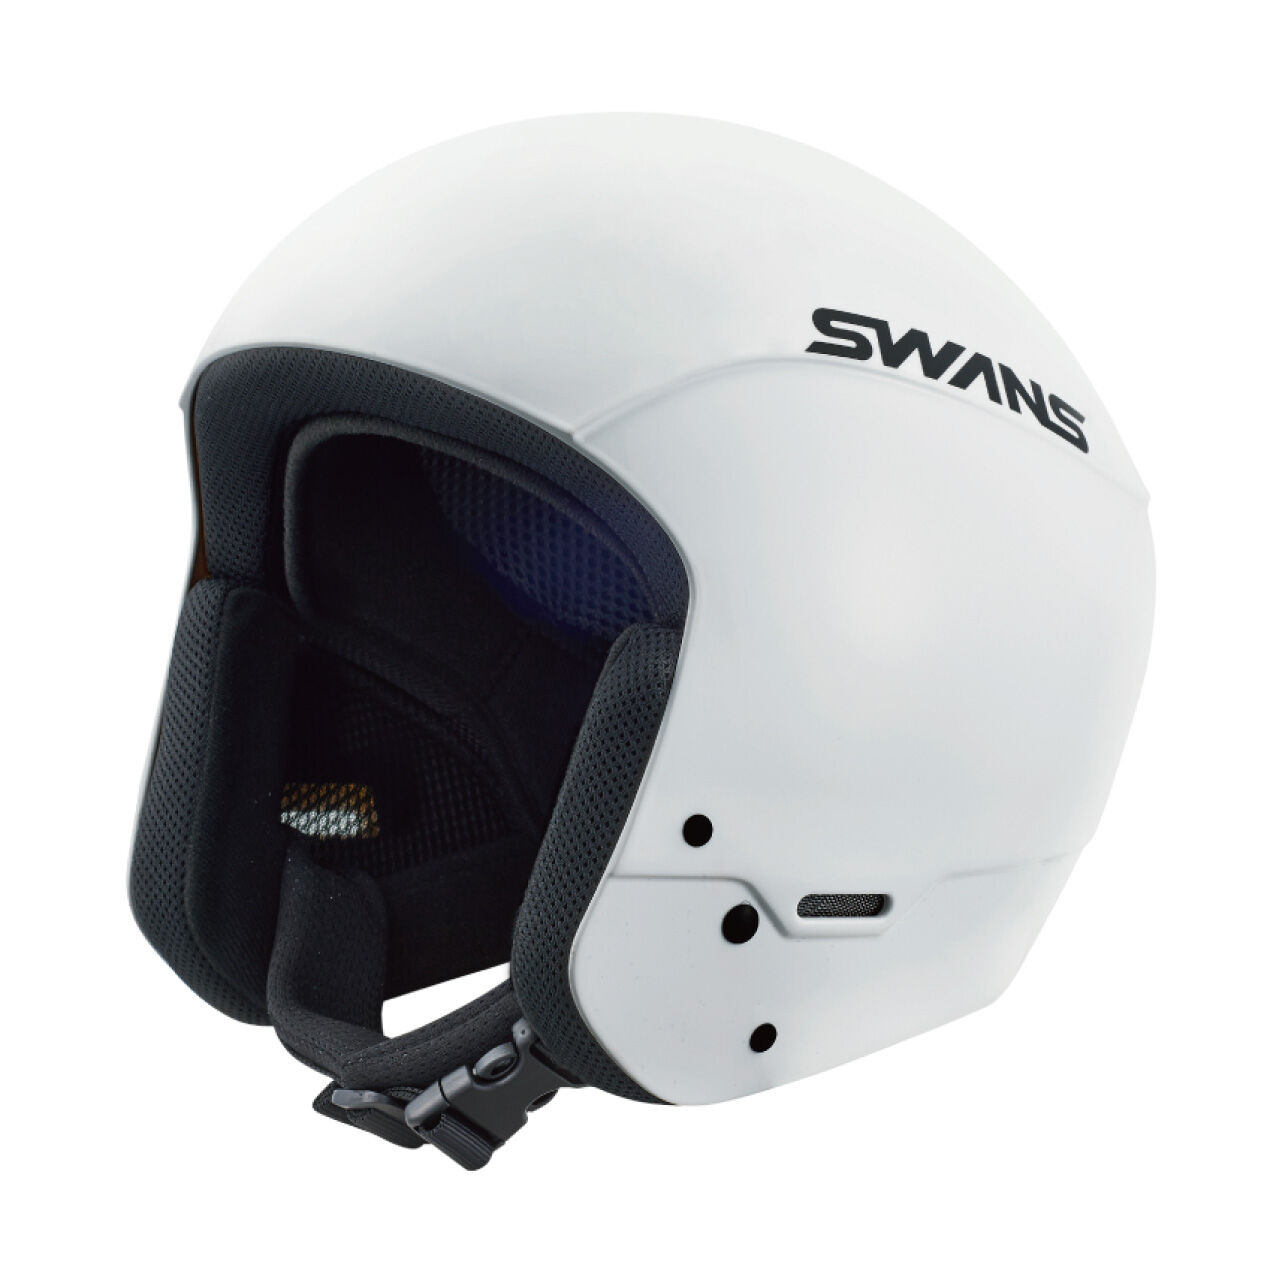 SWANS (速安视) HSR-90FIS XL W 白色,Opt7, large image number 0